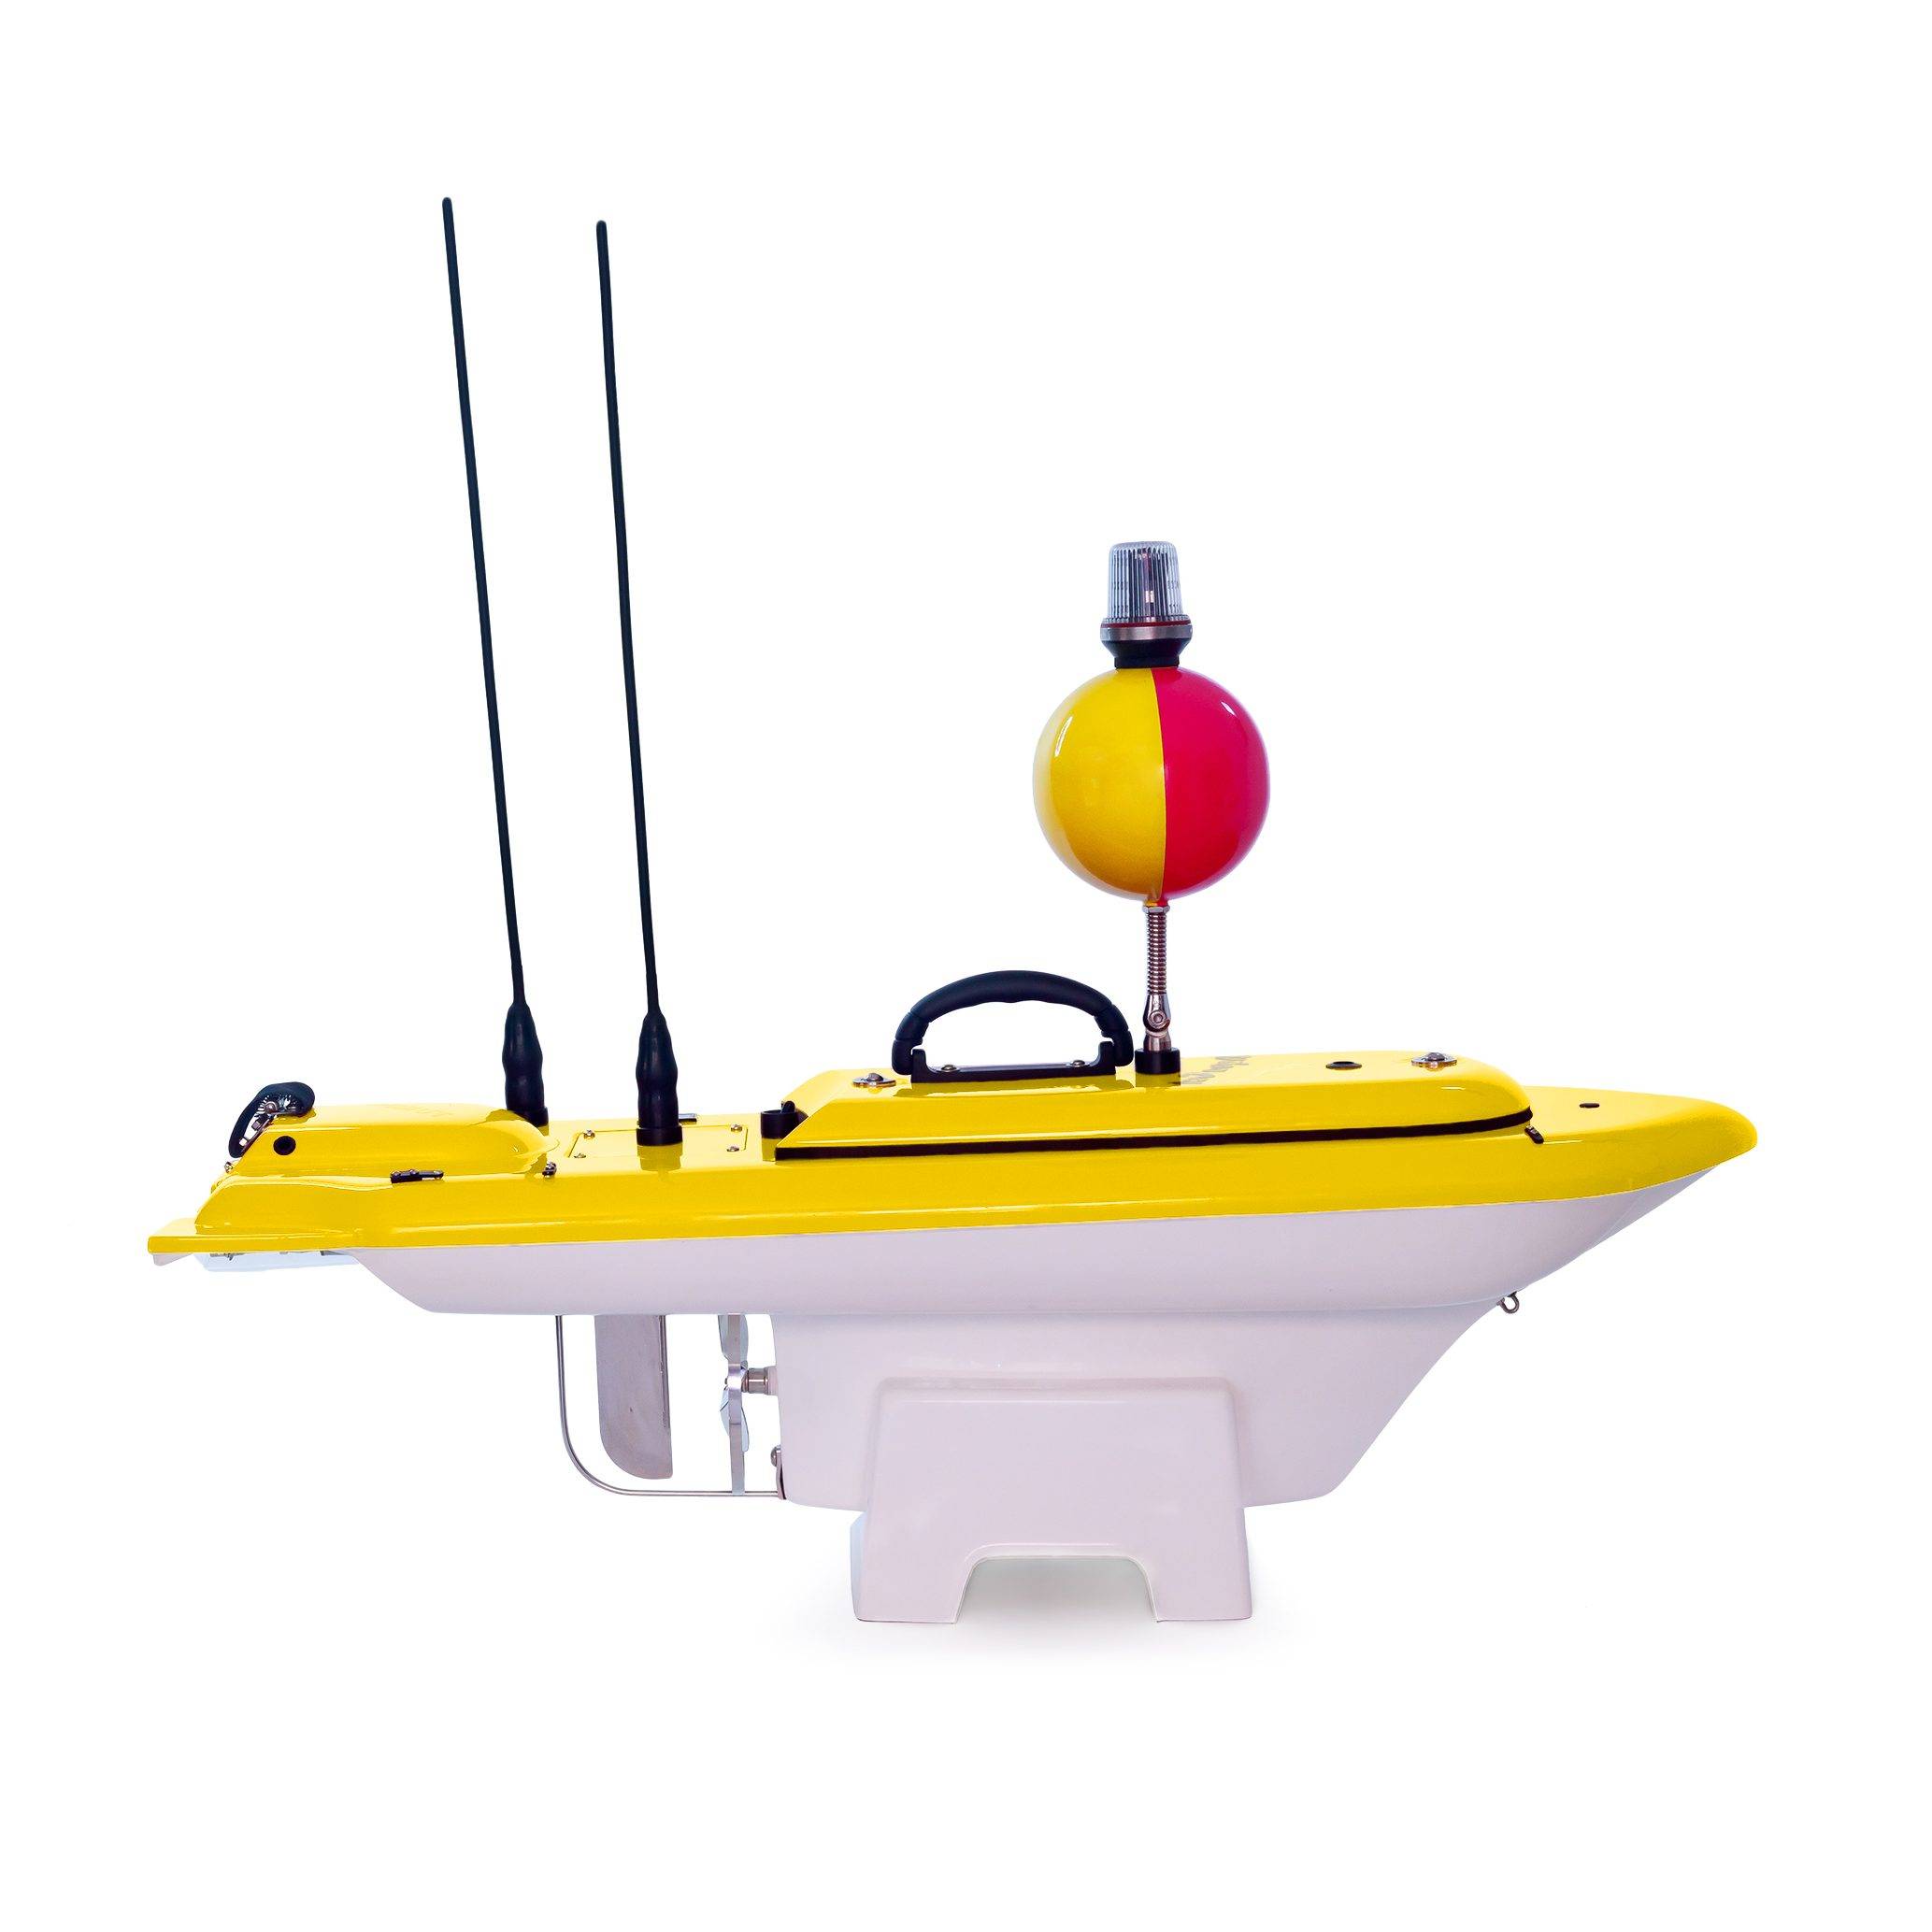 Aquacat Turbo X Fully Loaded base boat in Canary Yellow